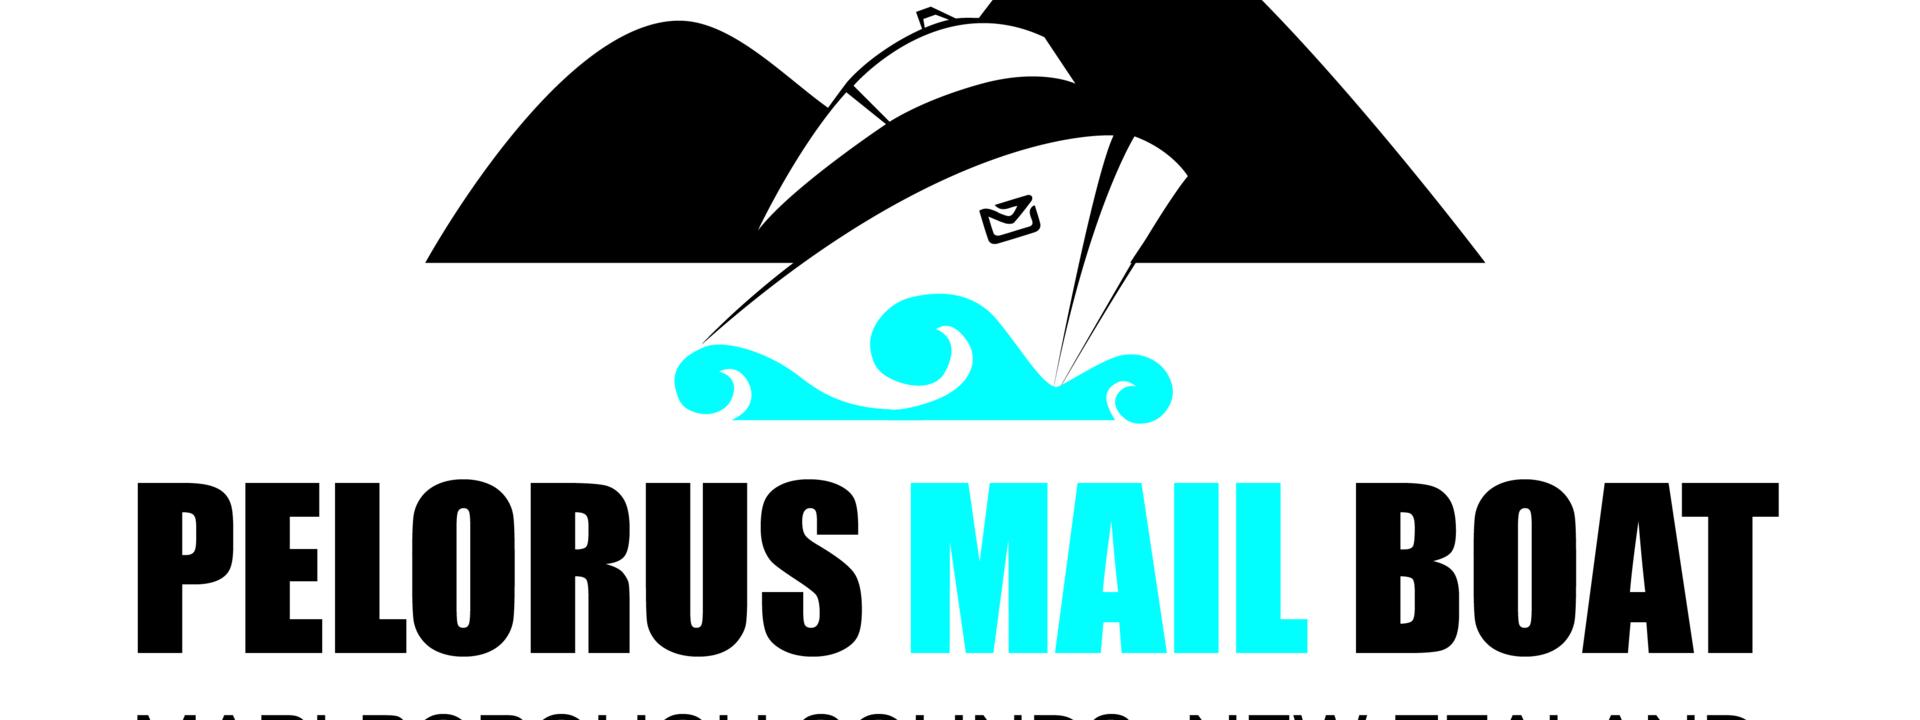 pelorus-mail-boat-logo-stacked.jpg